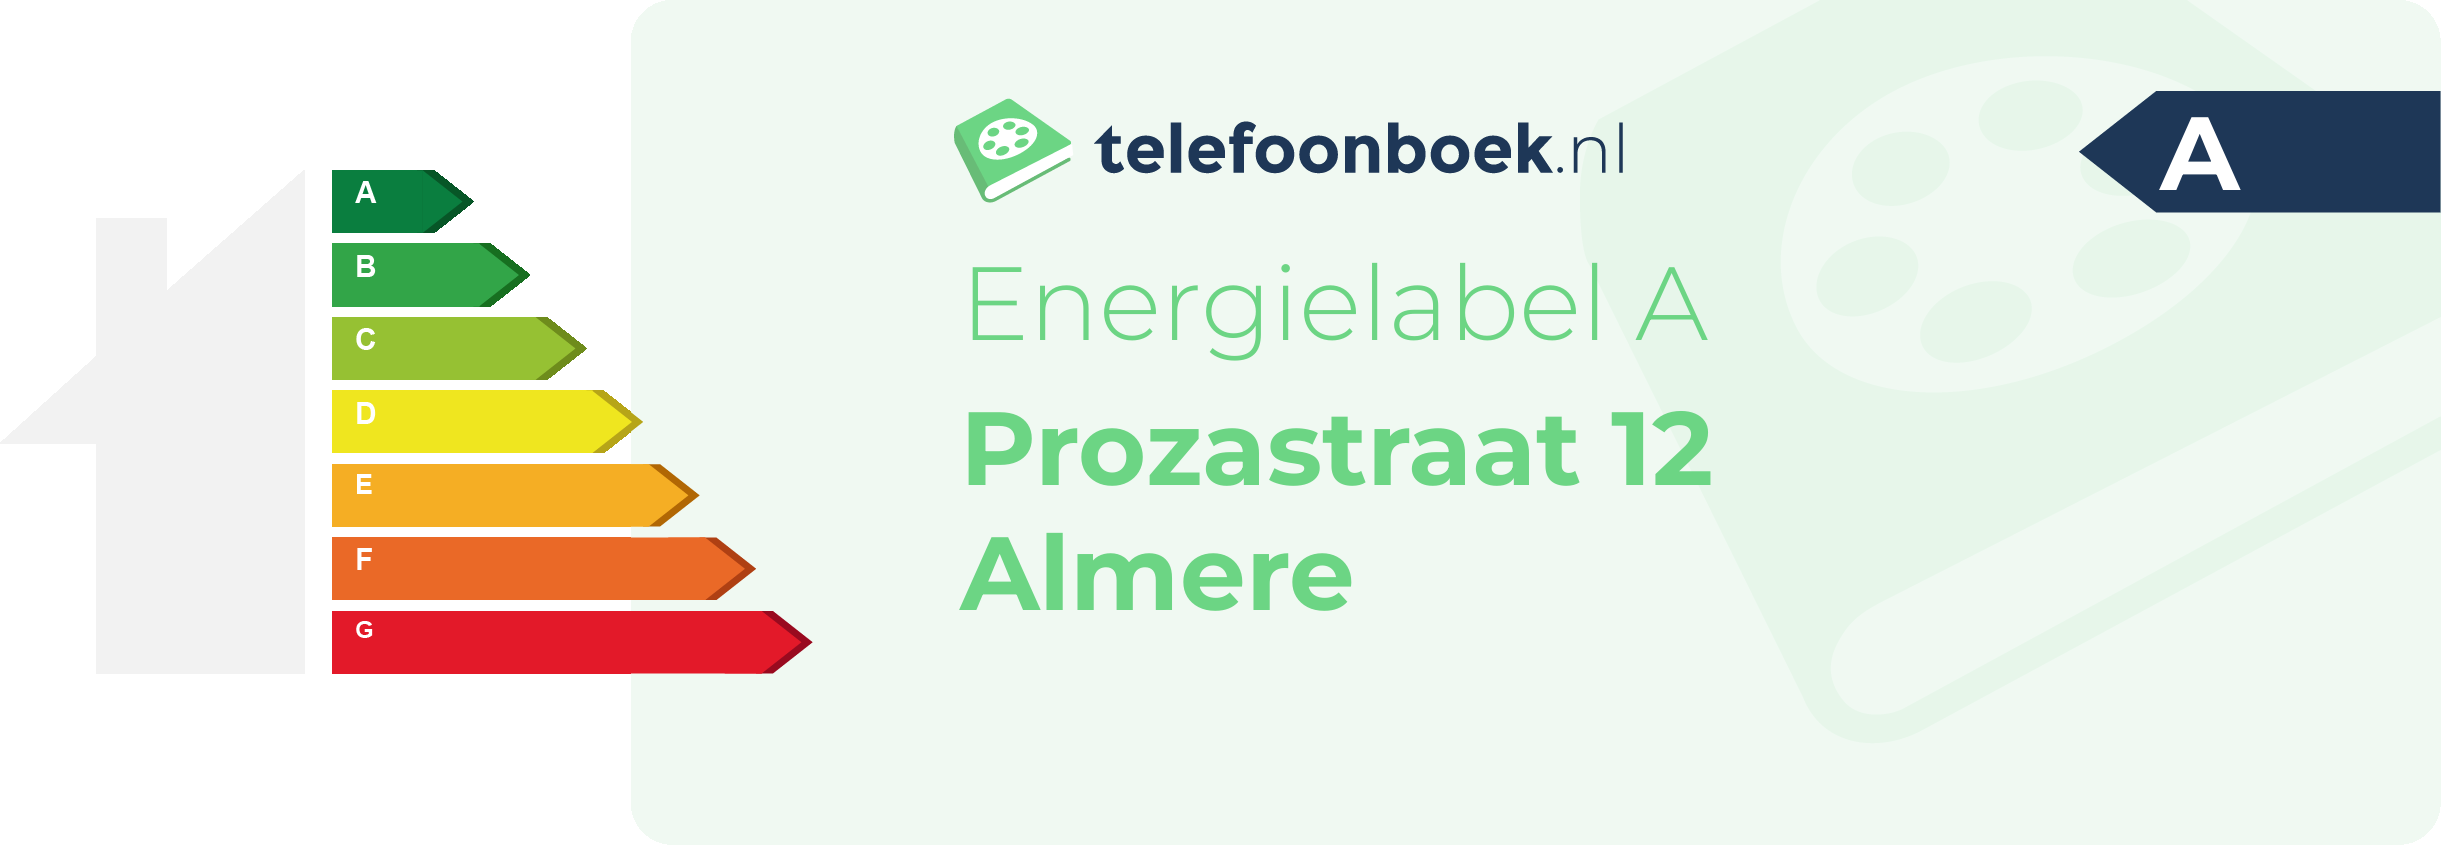 Energielabel Prozastraat 12 Almere